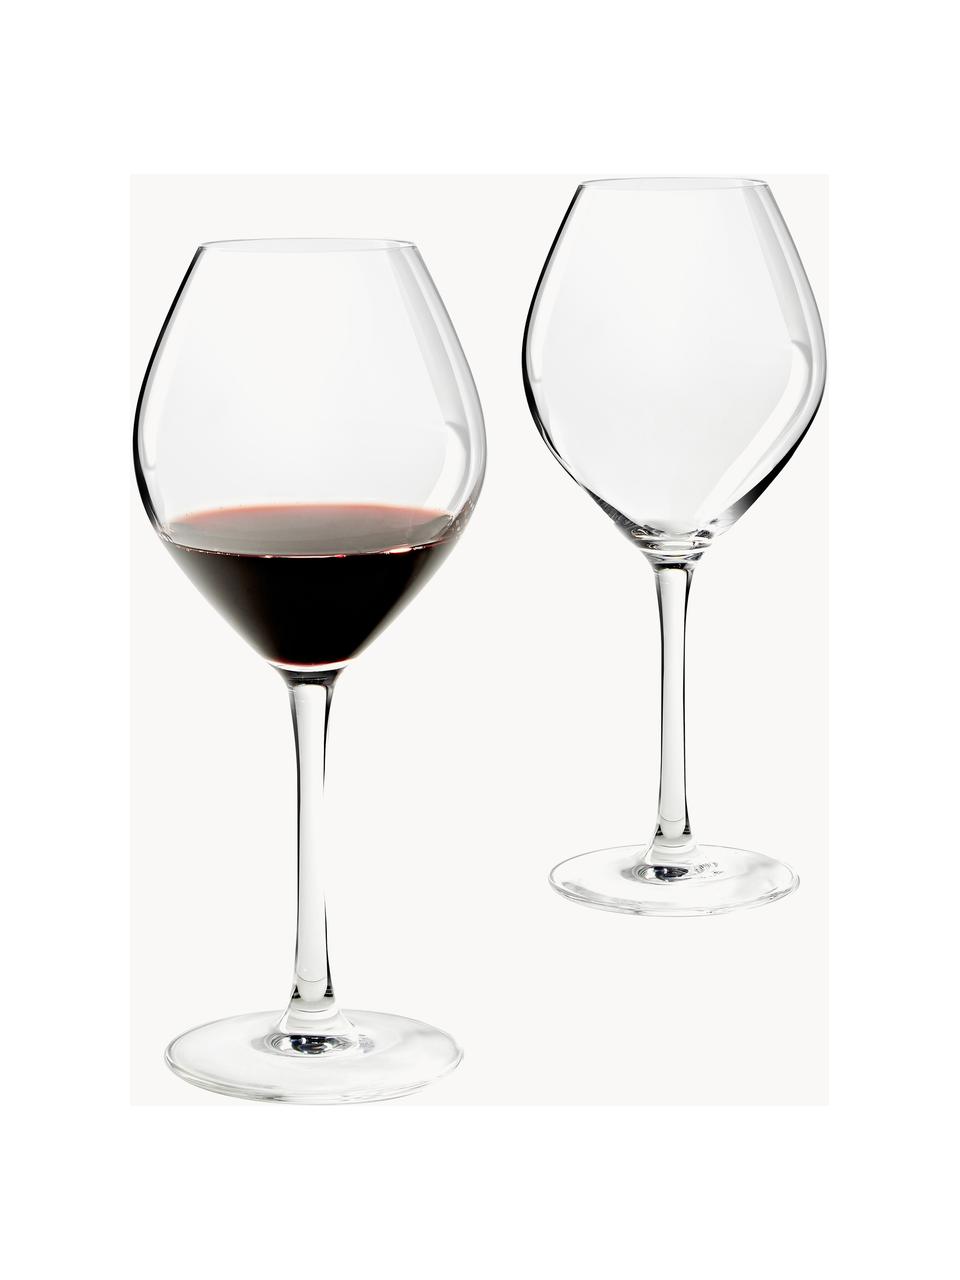 Sklenice na červené víno Magnifique, 6 ks, Foukané sklo, Transparentní, Ø 10 cm, V 24 cm, 470 ml